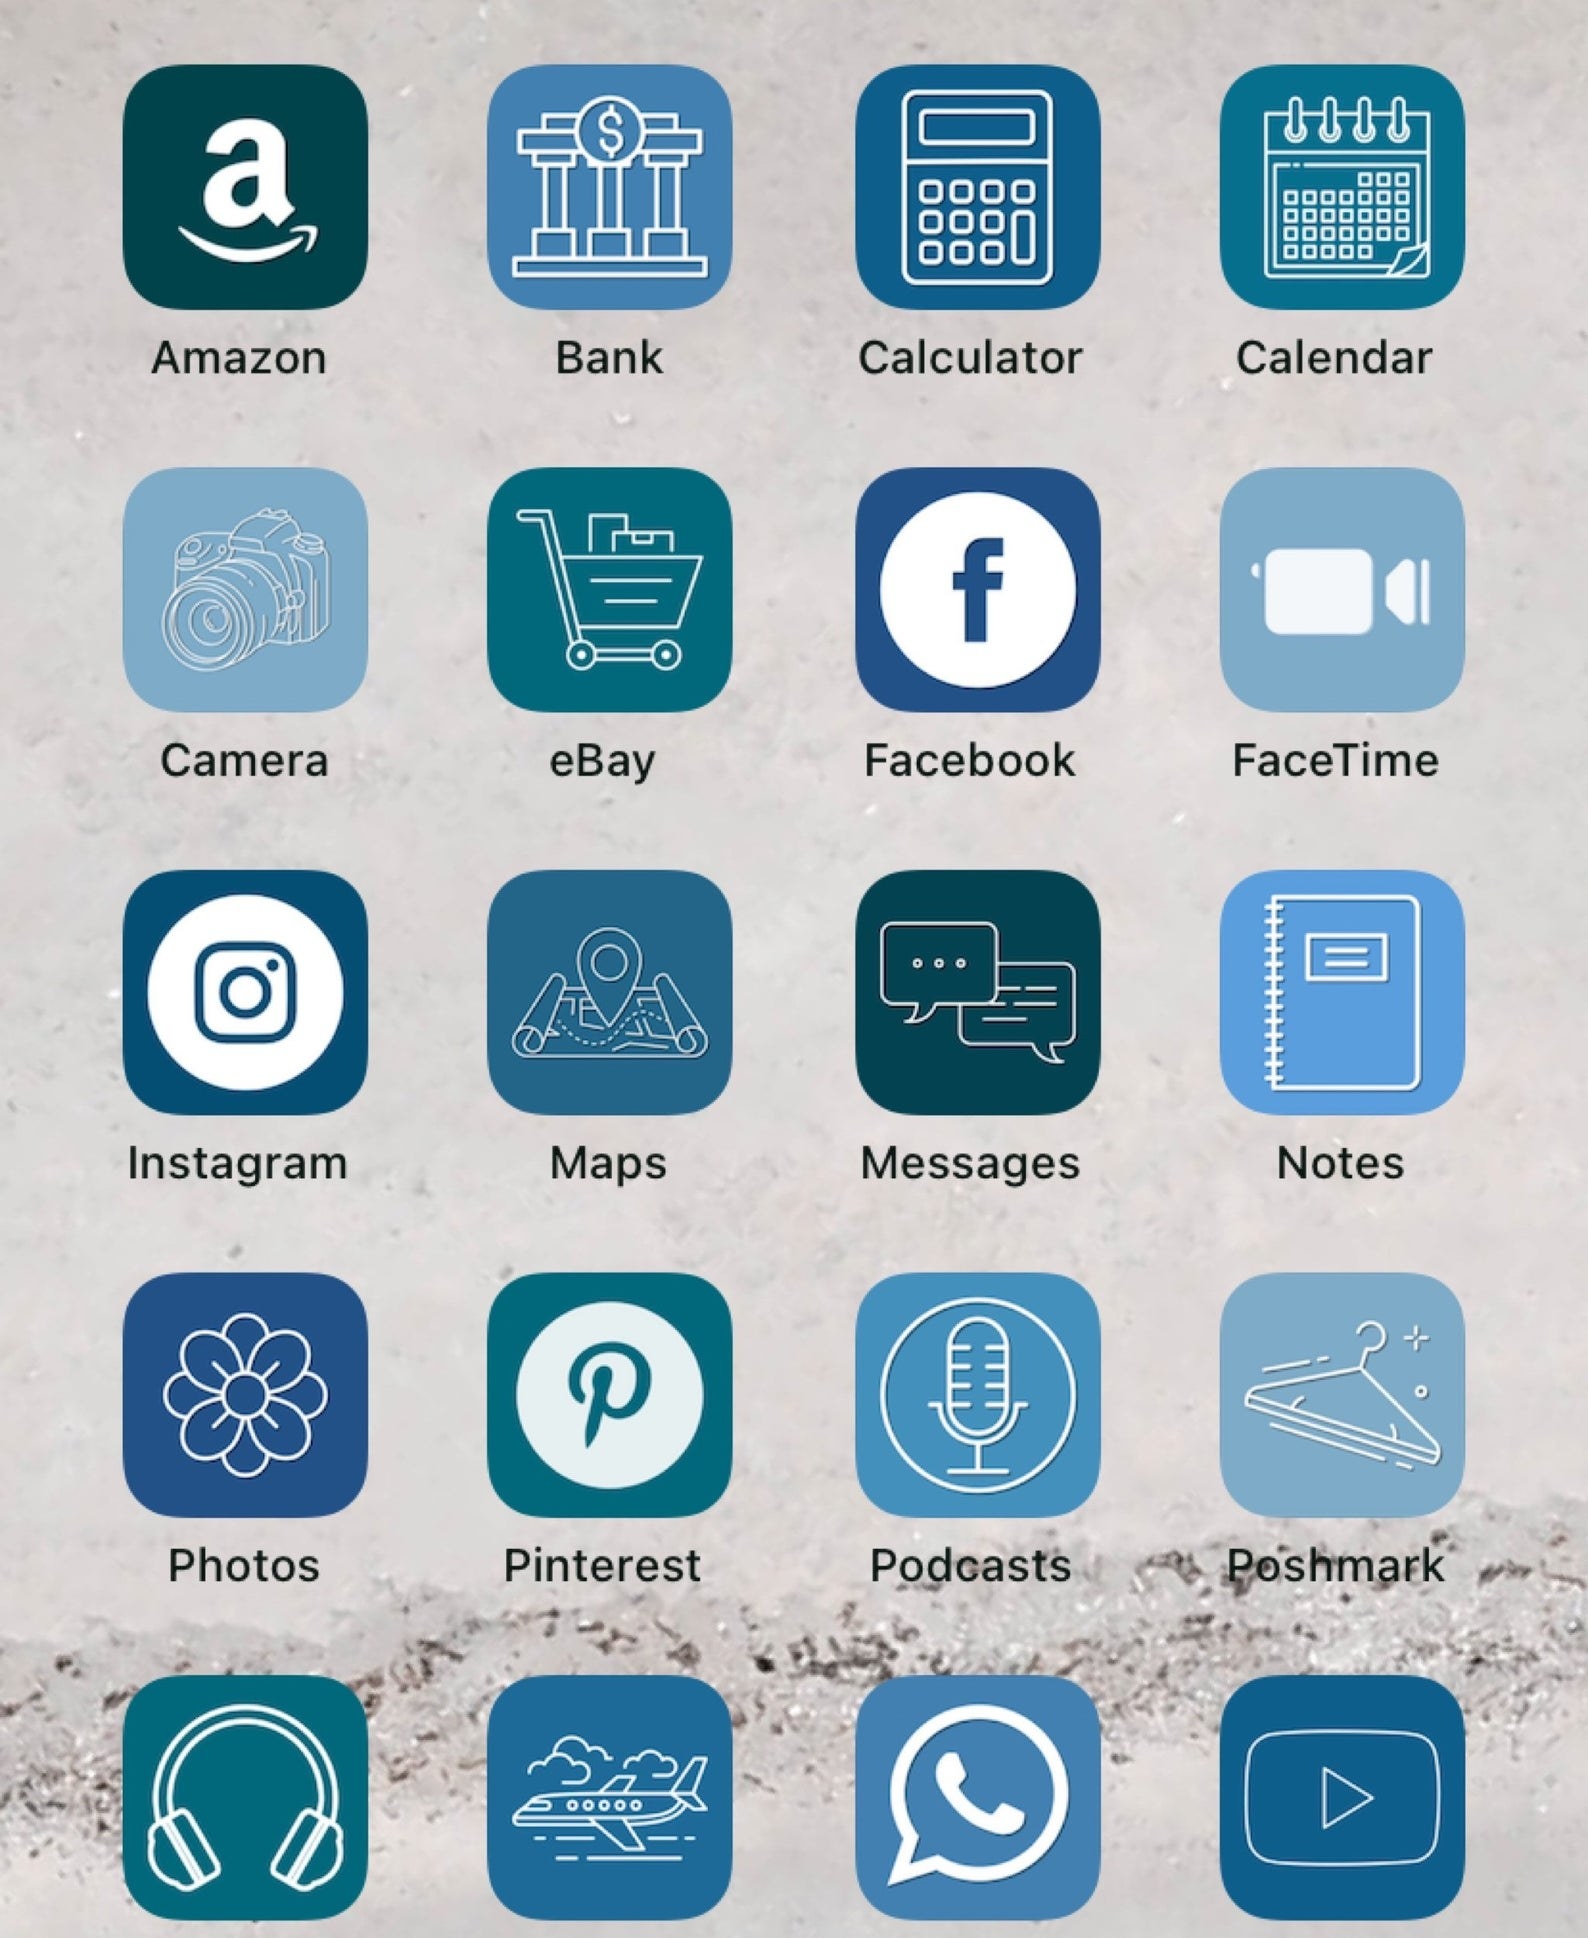 Ios14 Aesthetic App Icon Themes